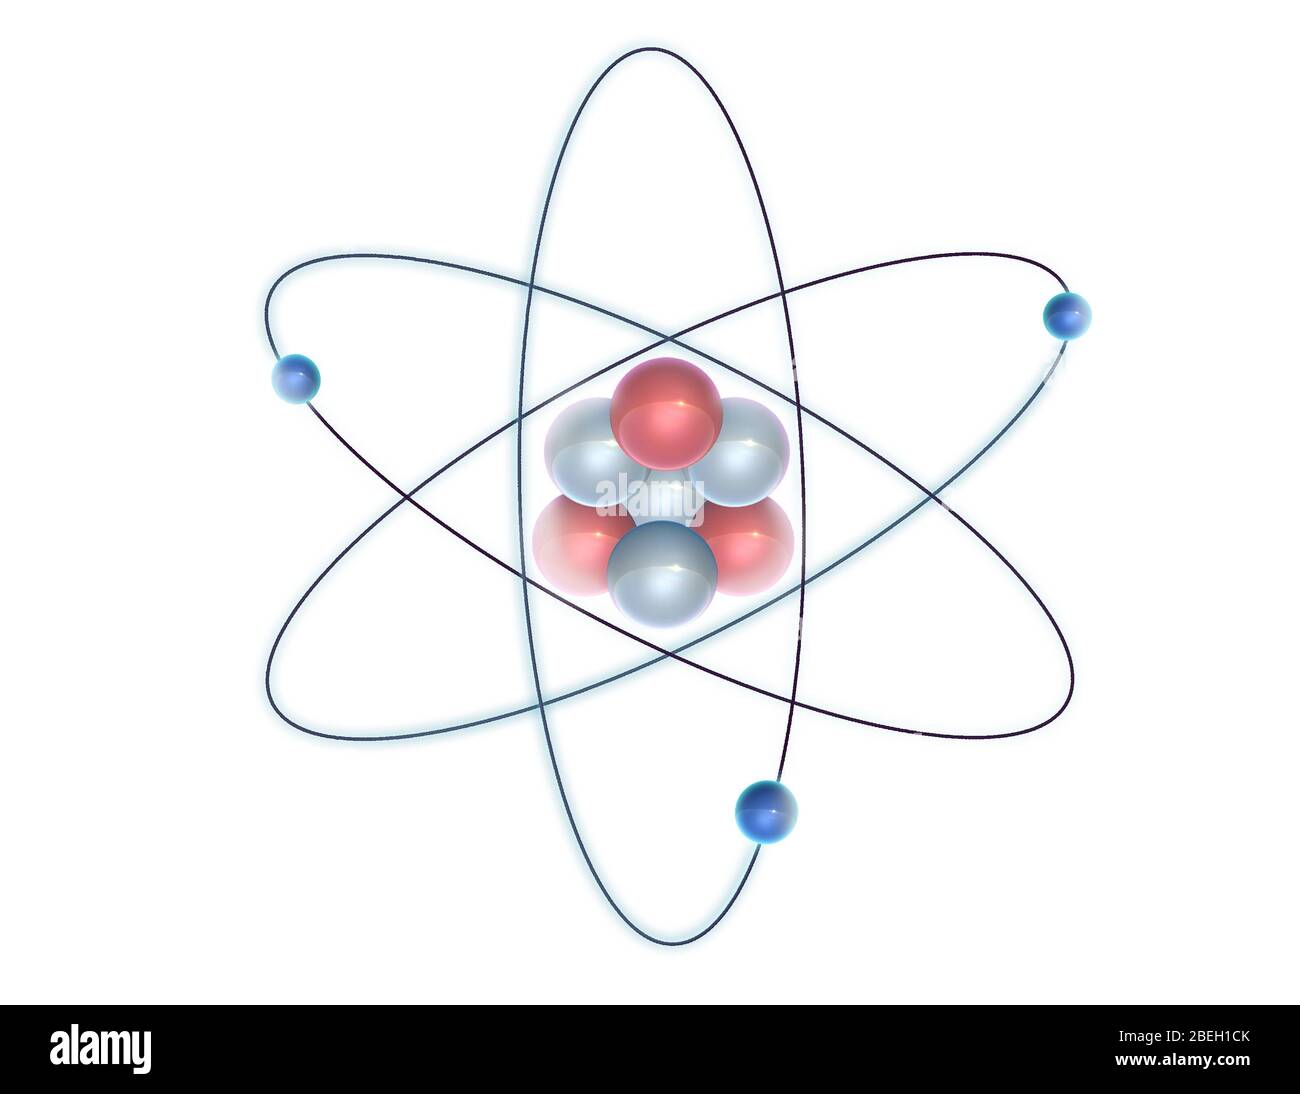 atomic structure of lithium